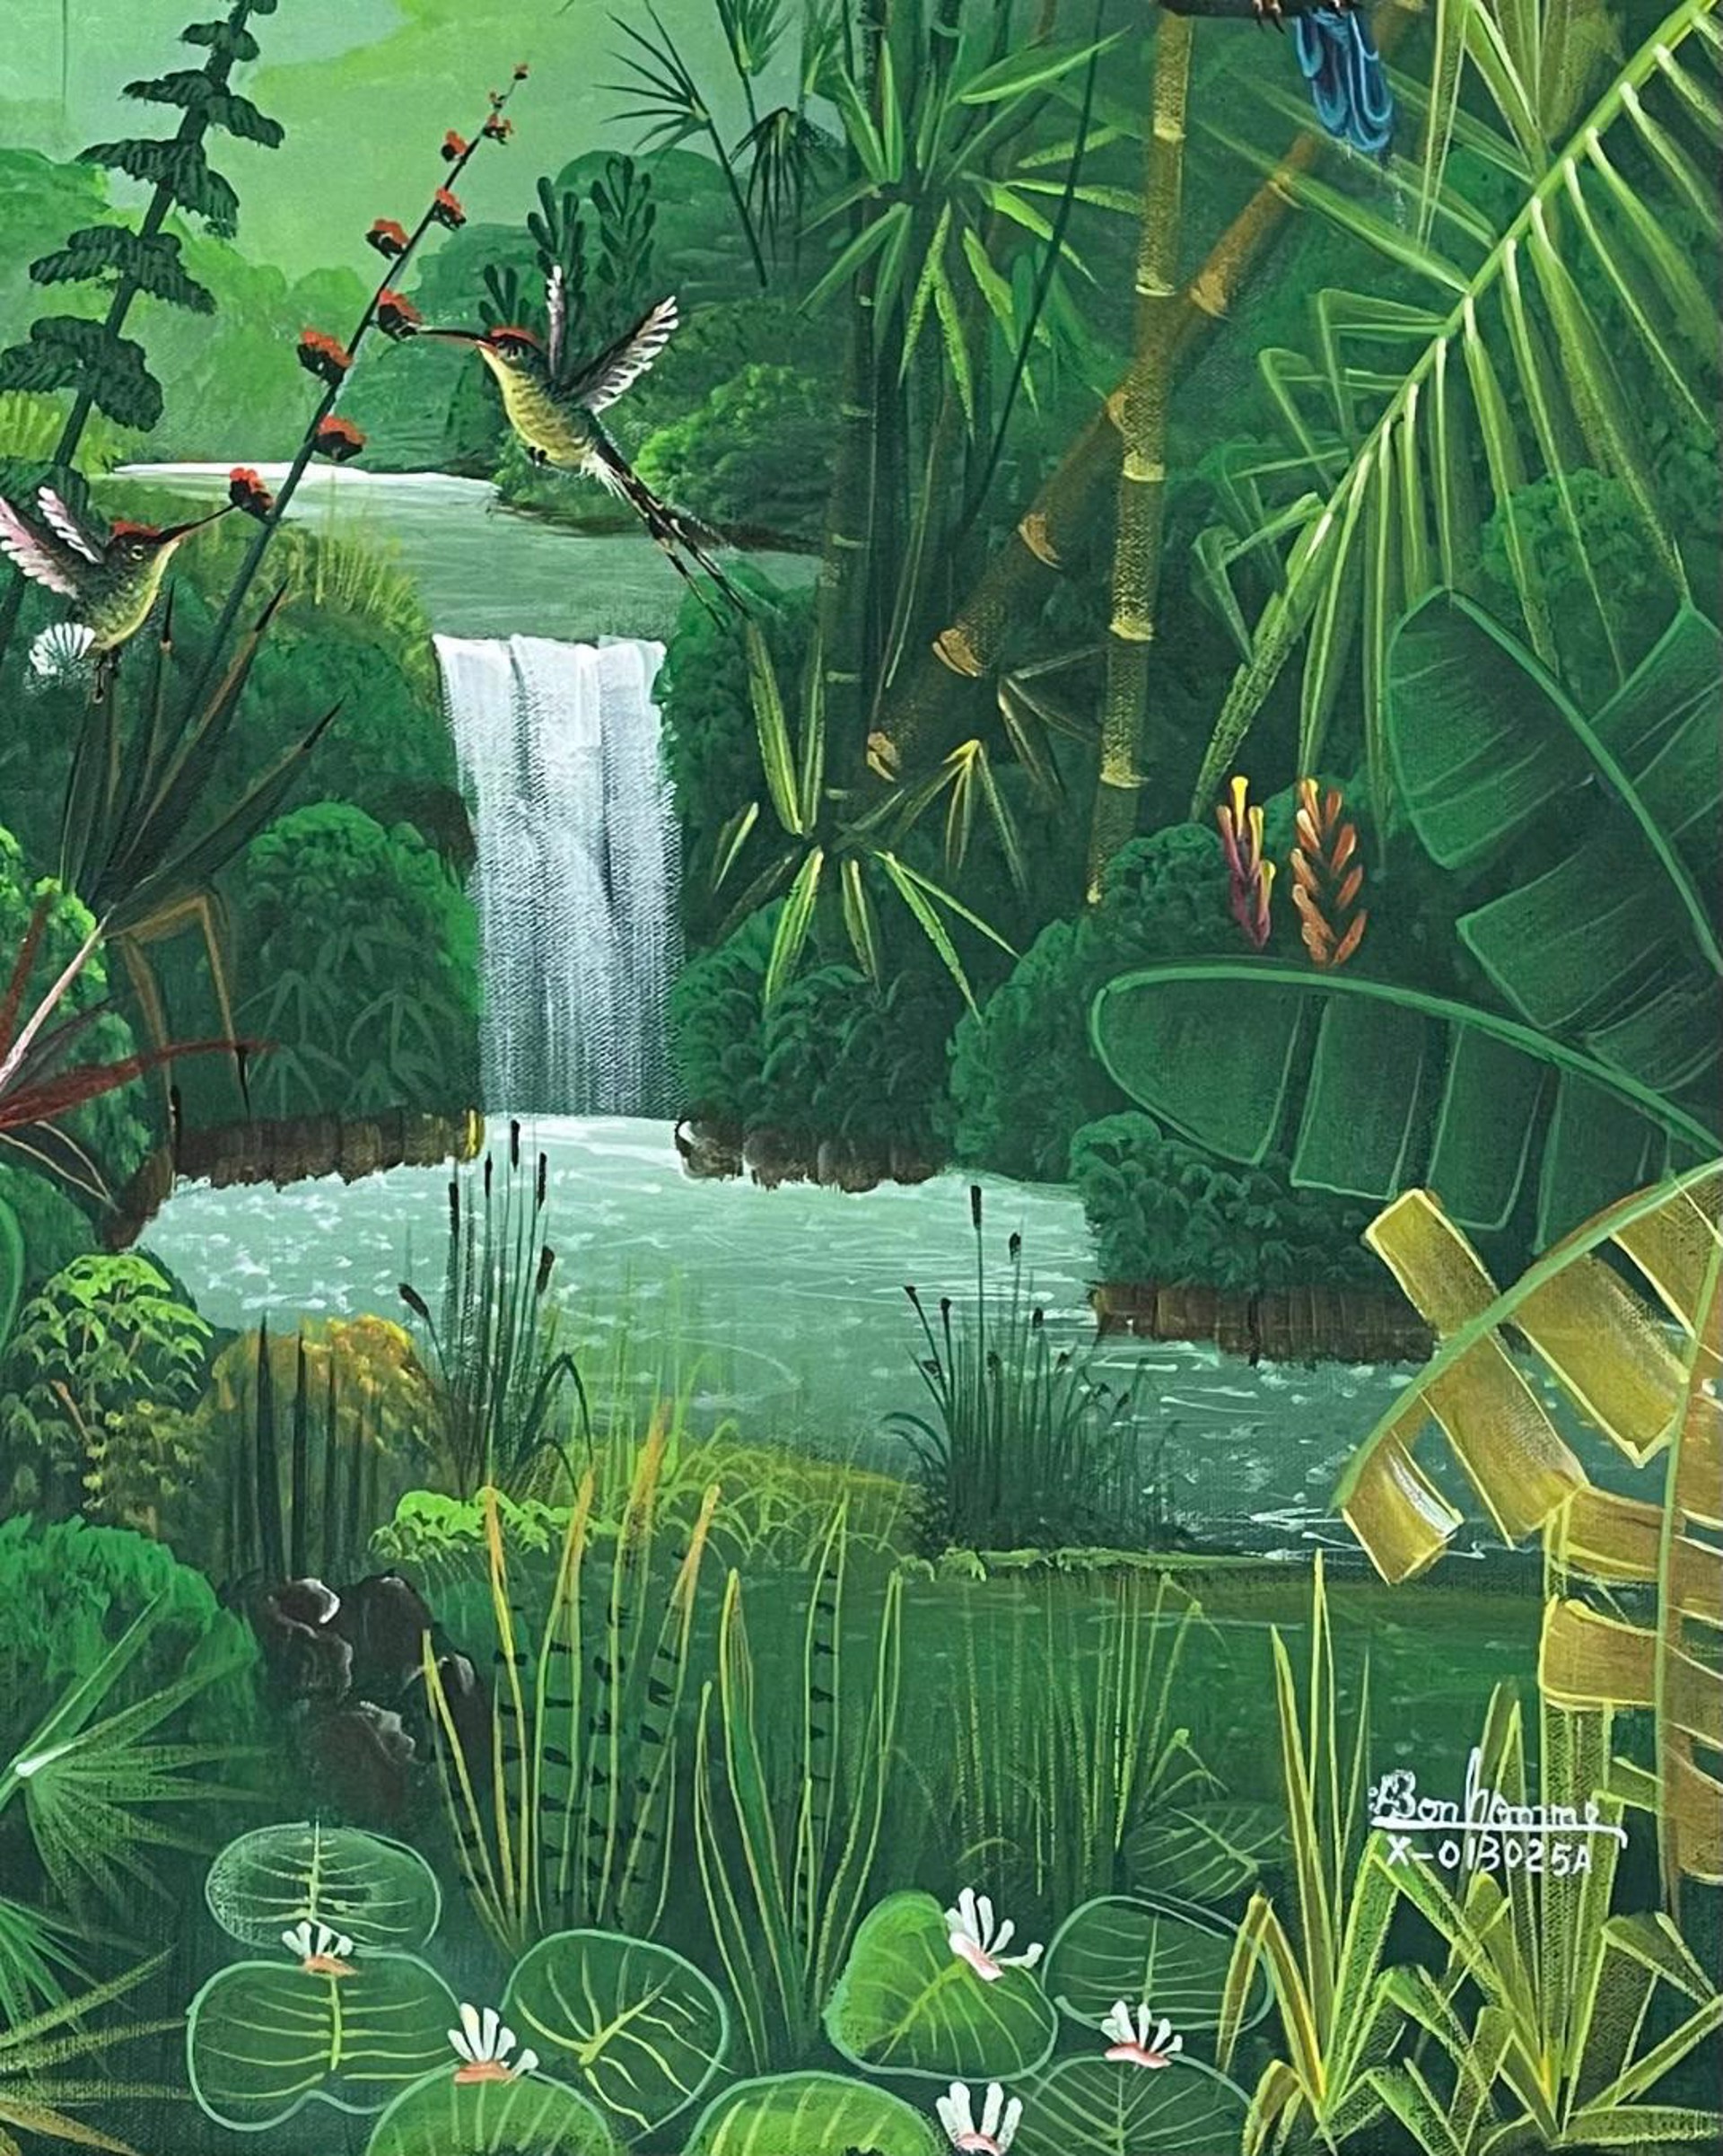 Lush Tropical Paradise #29MFN by Albott Bonhomme (Haitian, b. 1963)